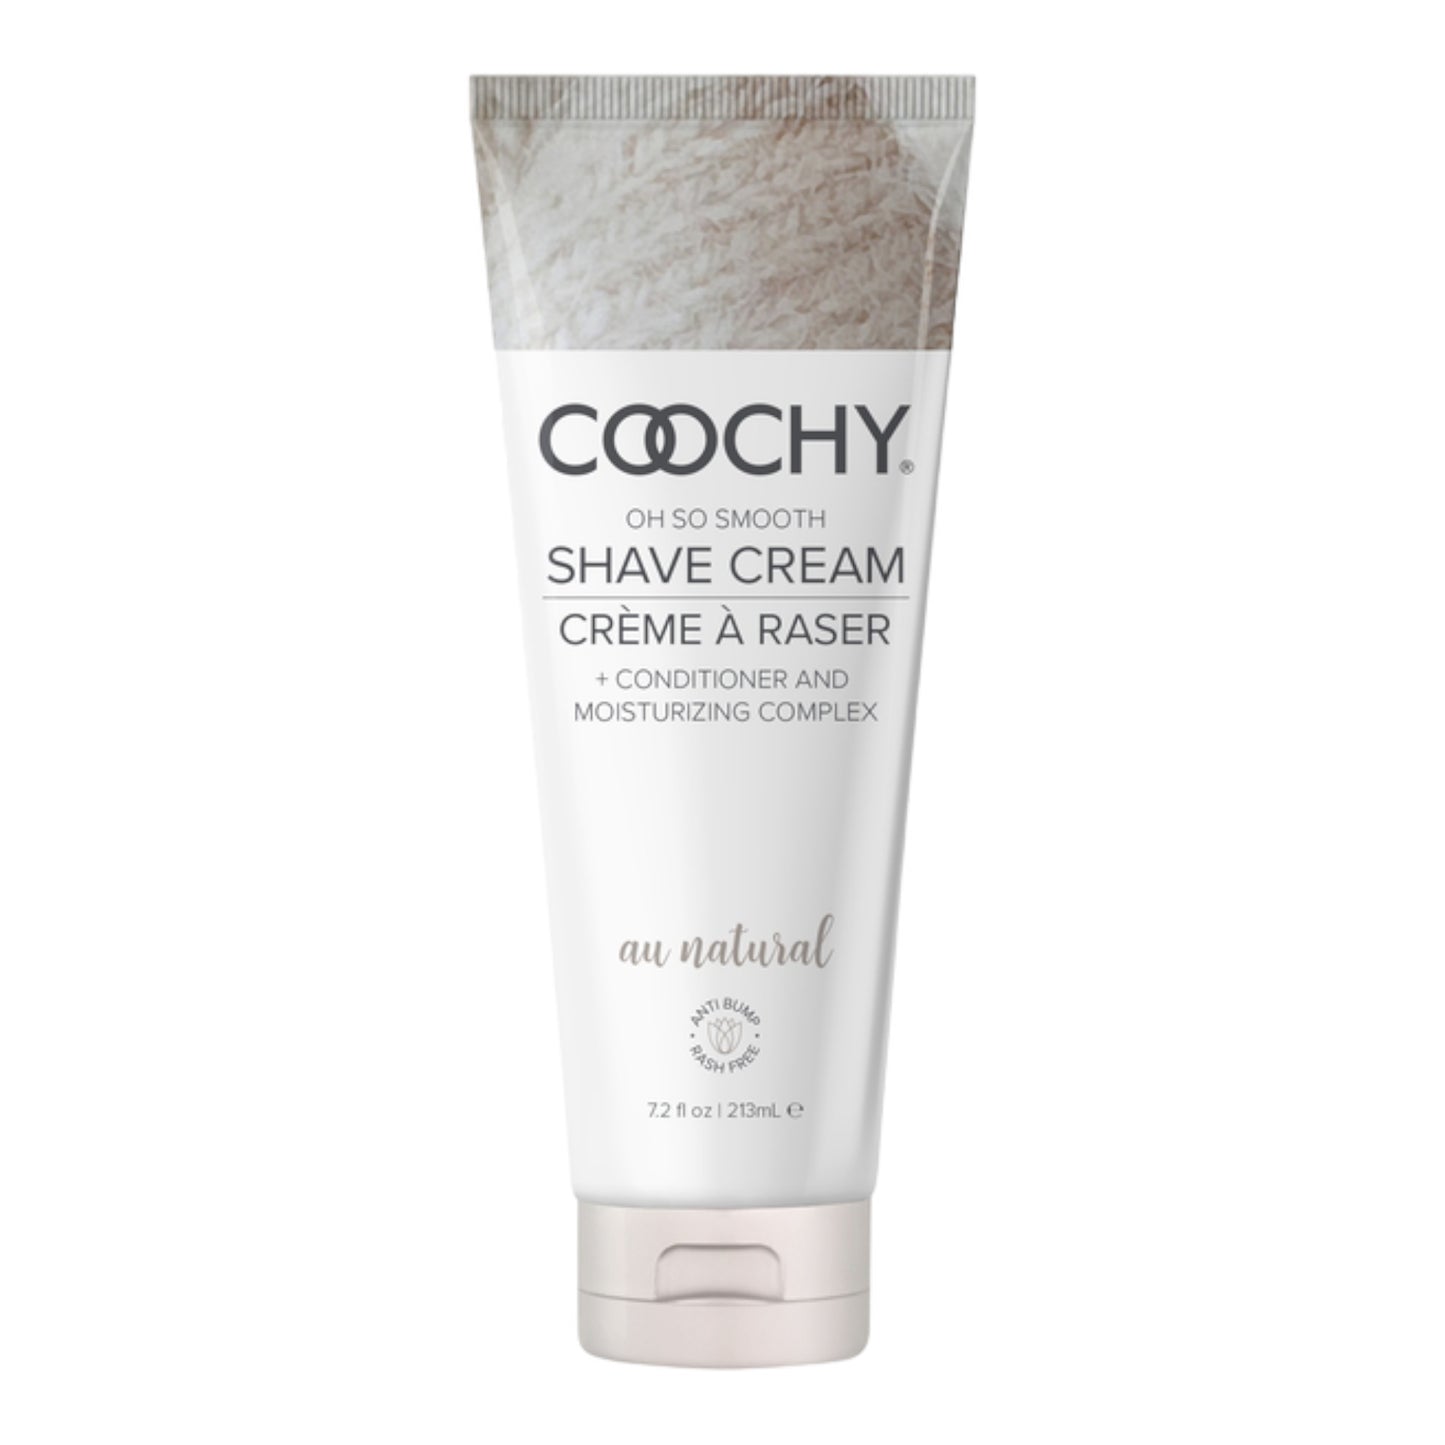 Coochy® Shave Cream